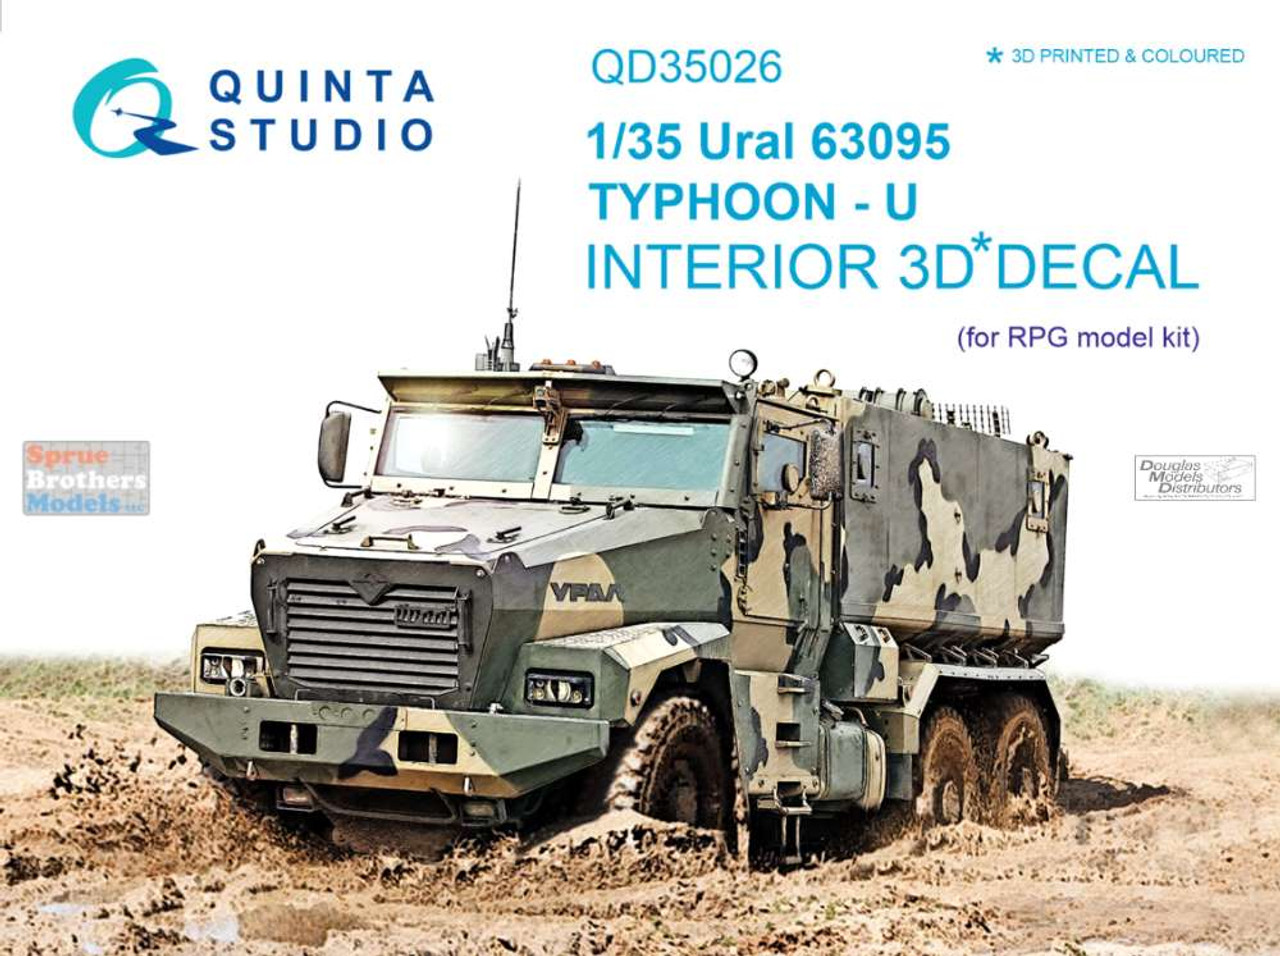 QTSQD35026 1:35 Quinta Studio Interior 3D Decal - Ural 63095 Typhoon-U (RPG kit)